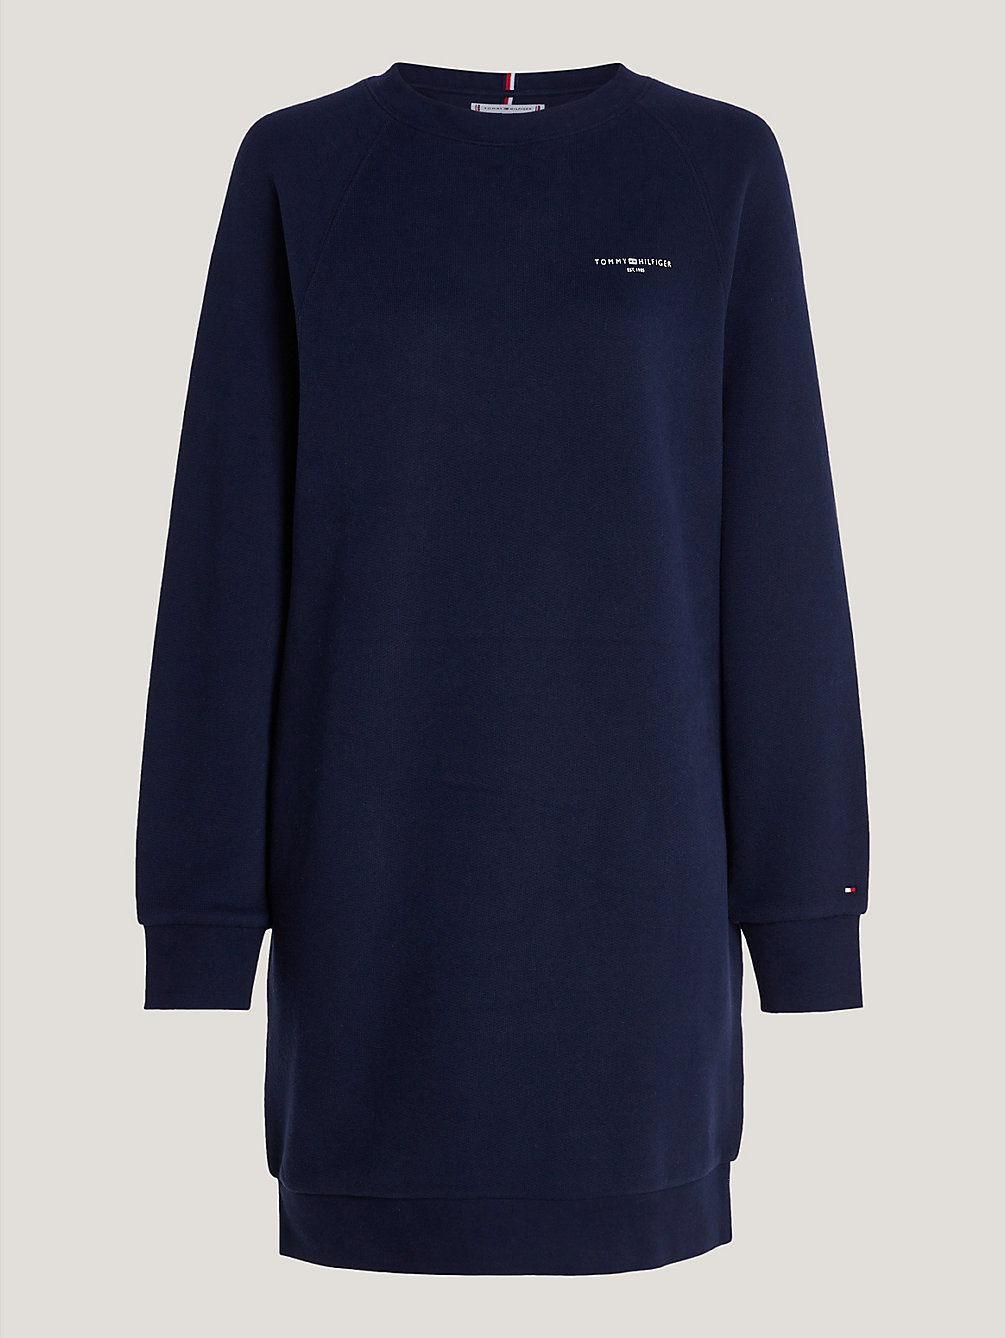 blue 1985 sweaterjurk voor dames - tommy hilfiger